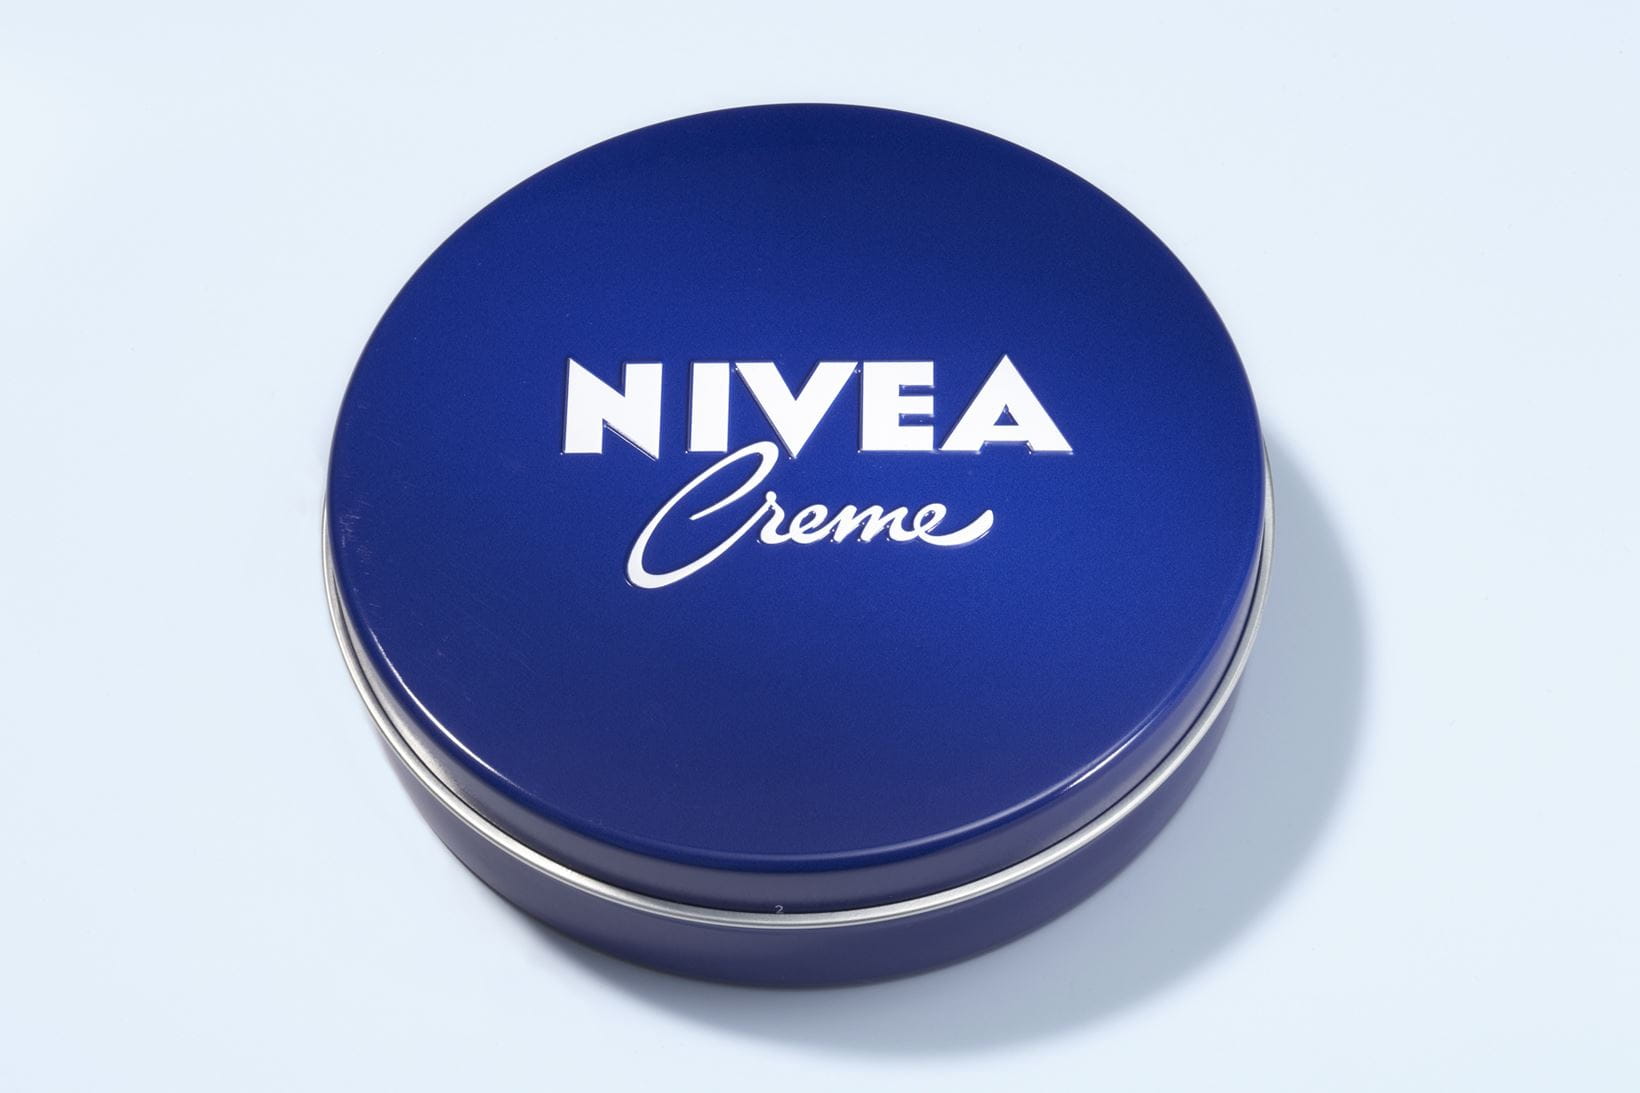 NIVEA Creme 2007